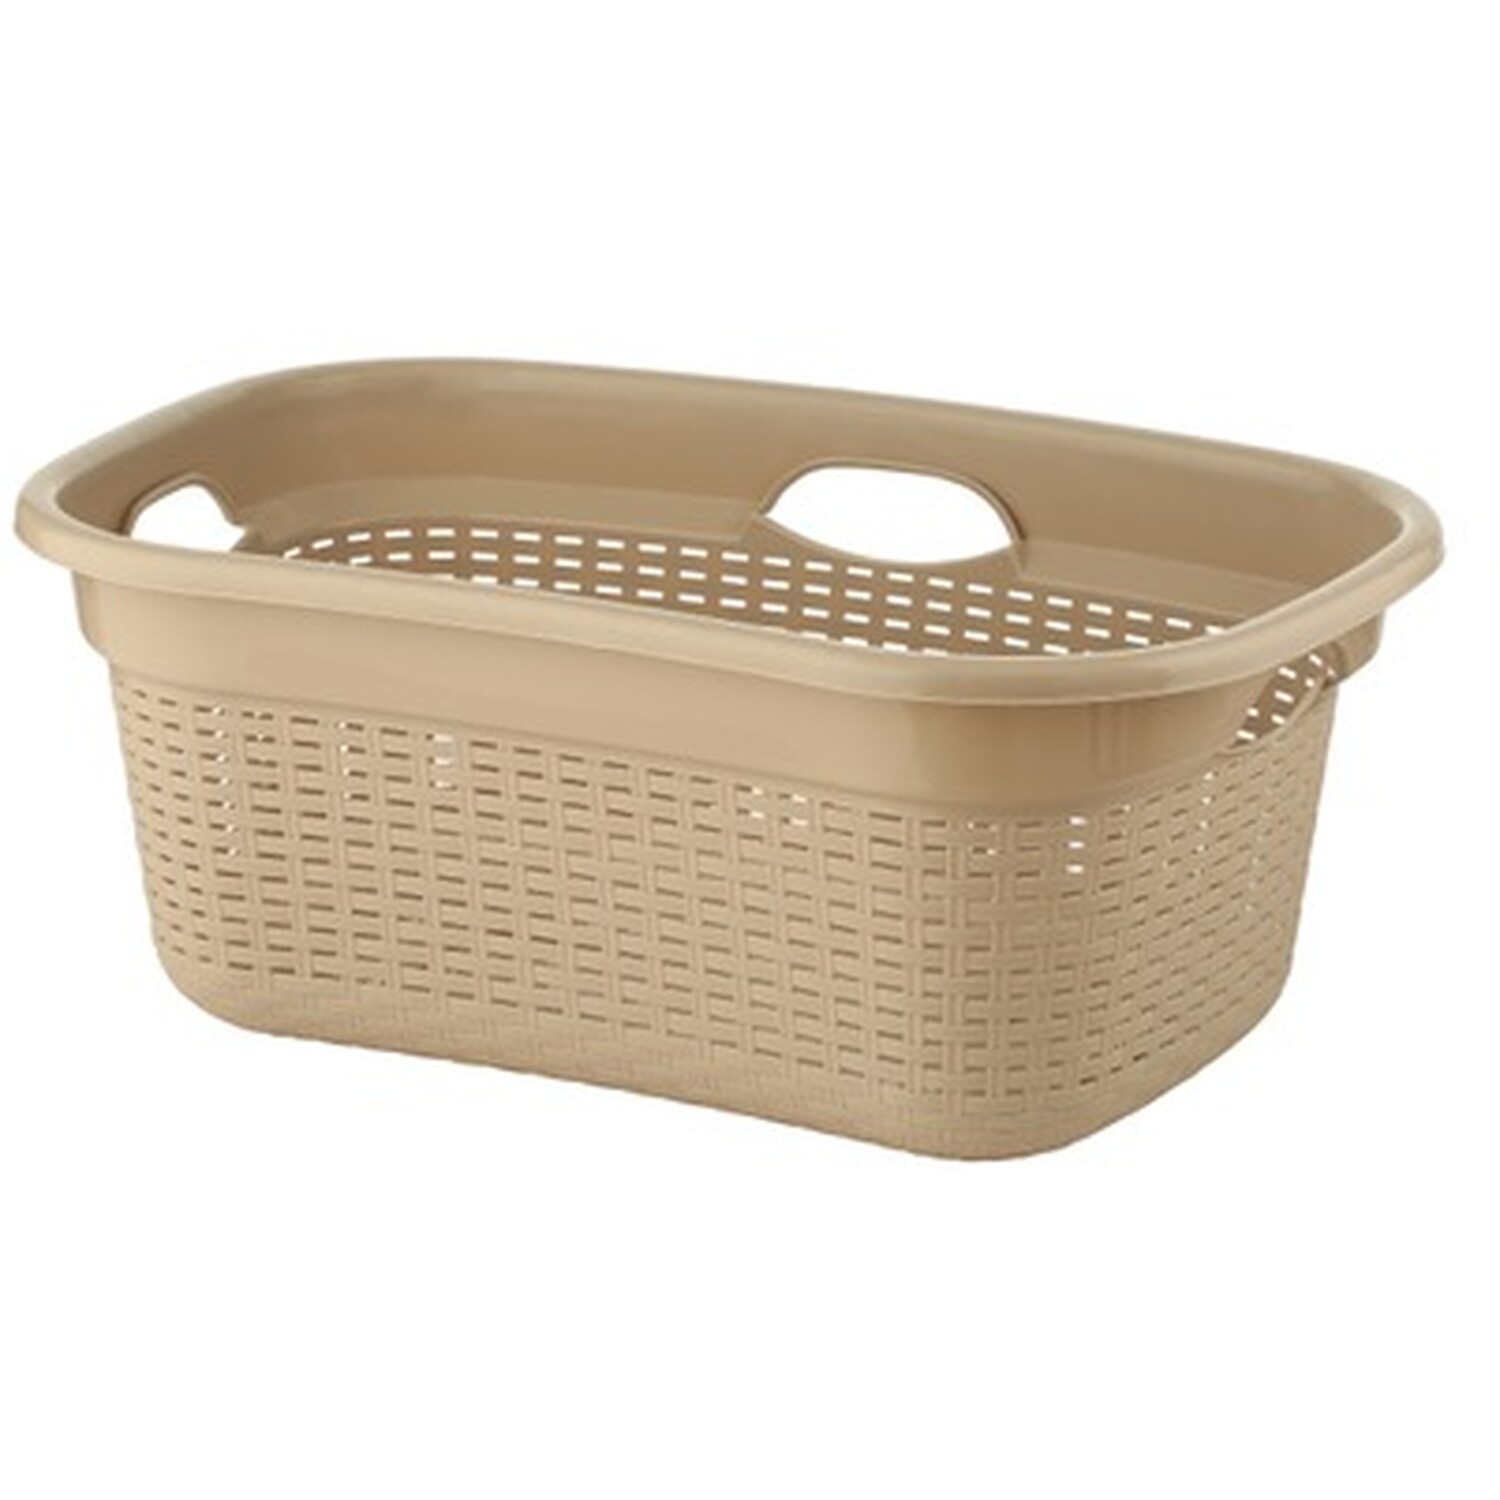 60L Oval Rattan Laundry Basket Image 1